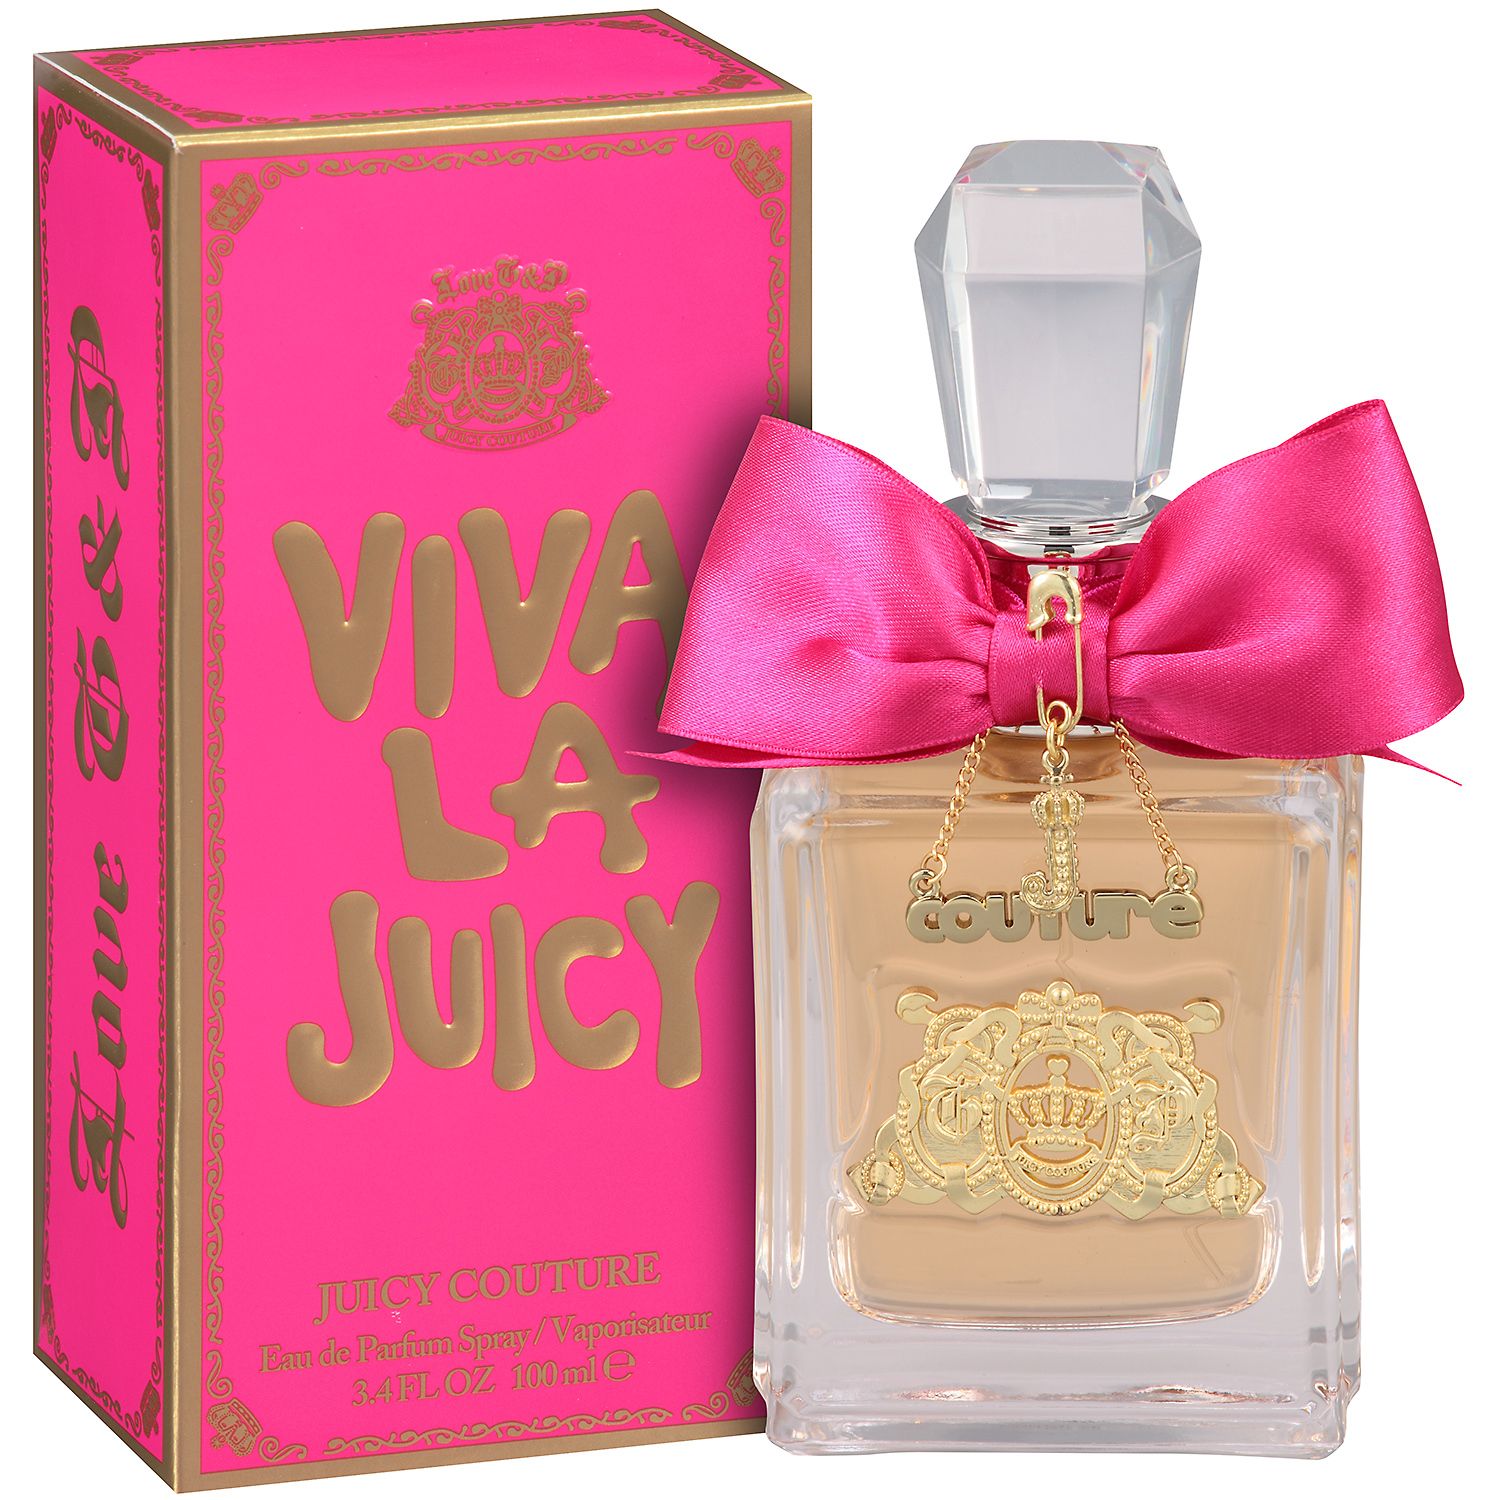 Juicy Couture Glass Viva La Juicy Empty 3.4 Fl Oz Perfume Bottle